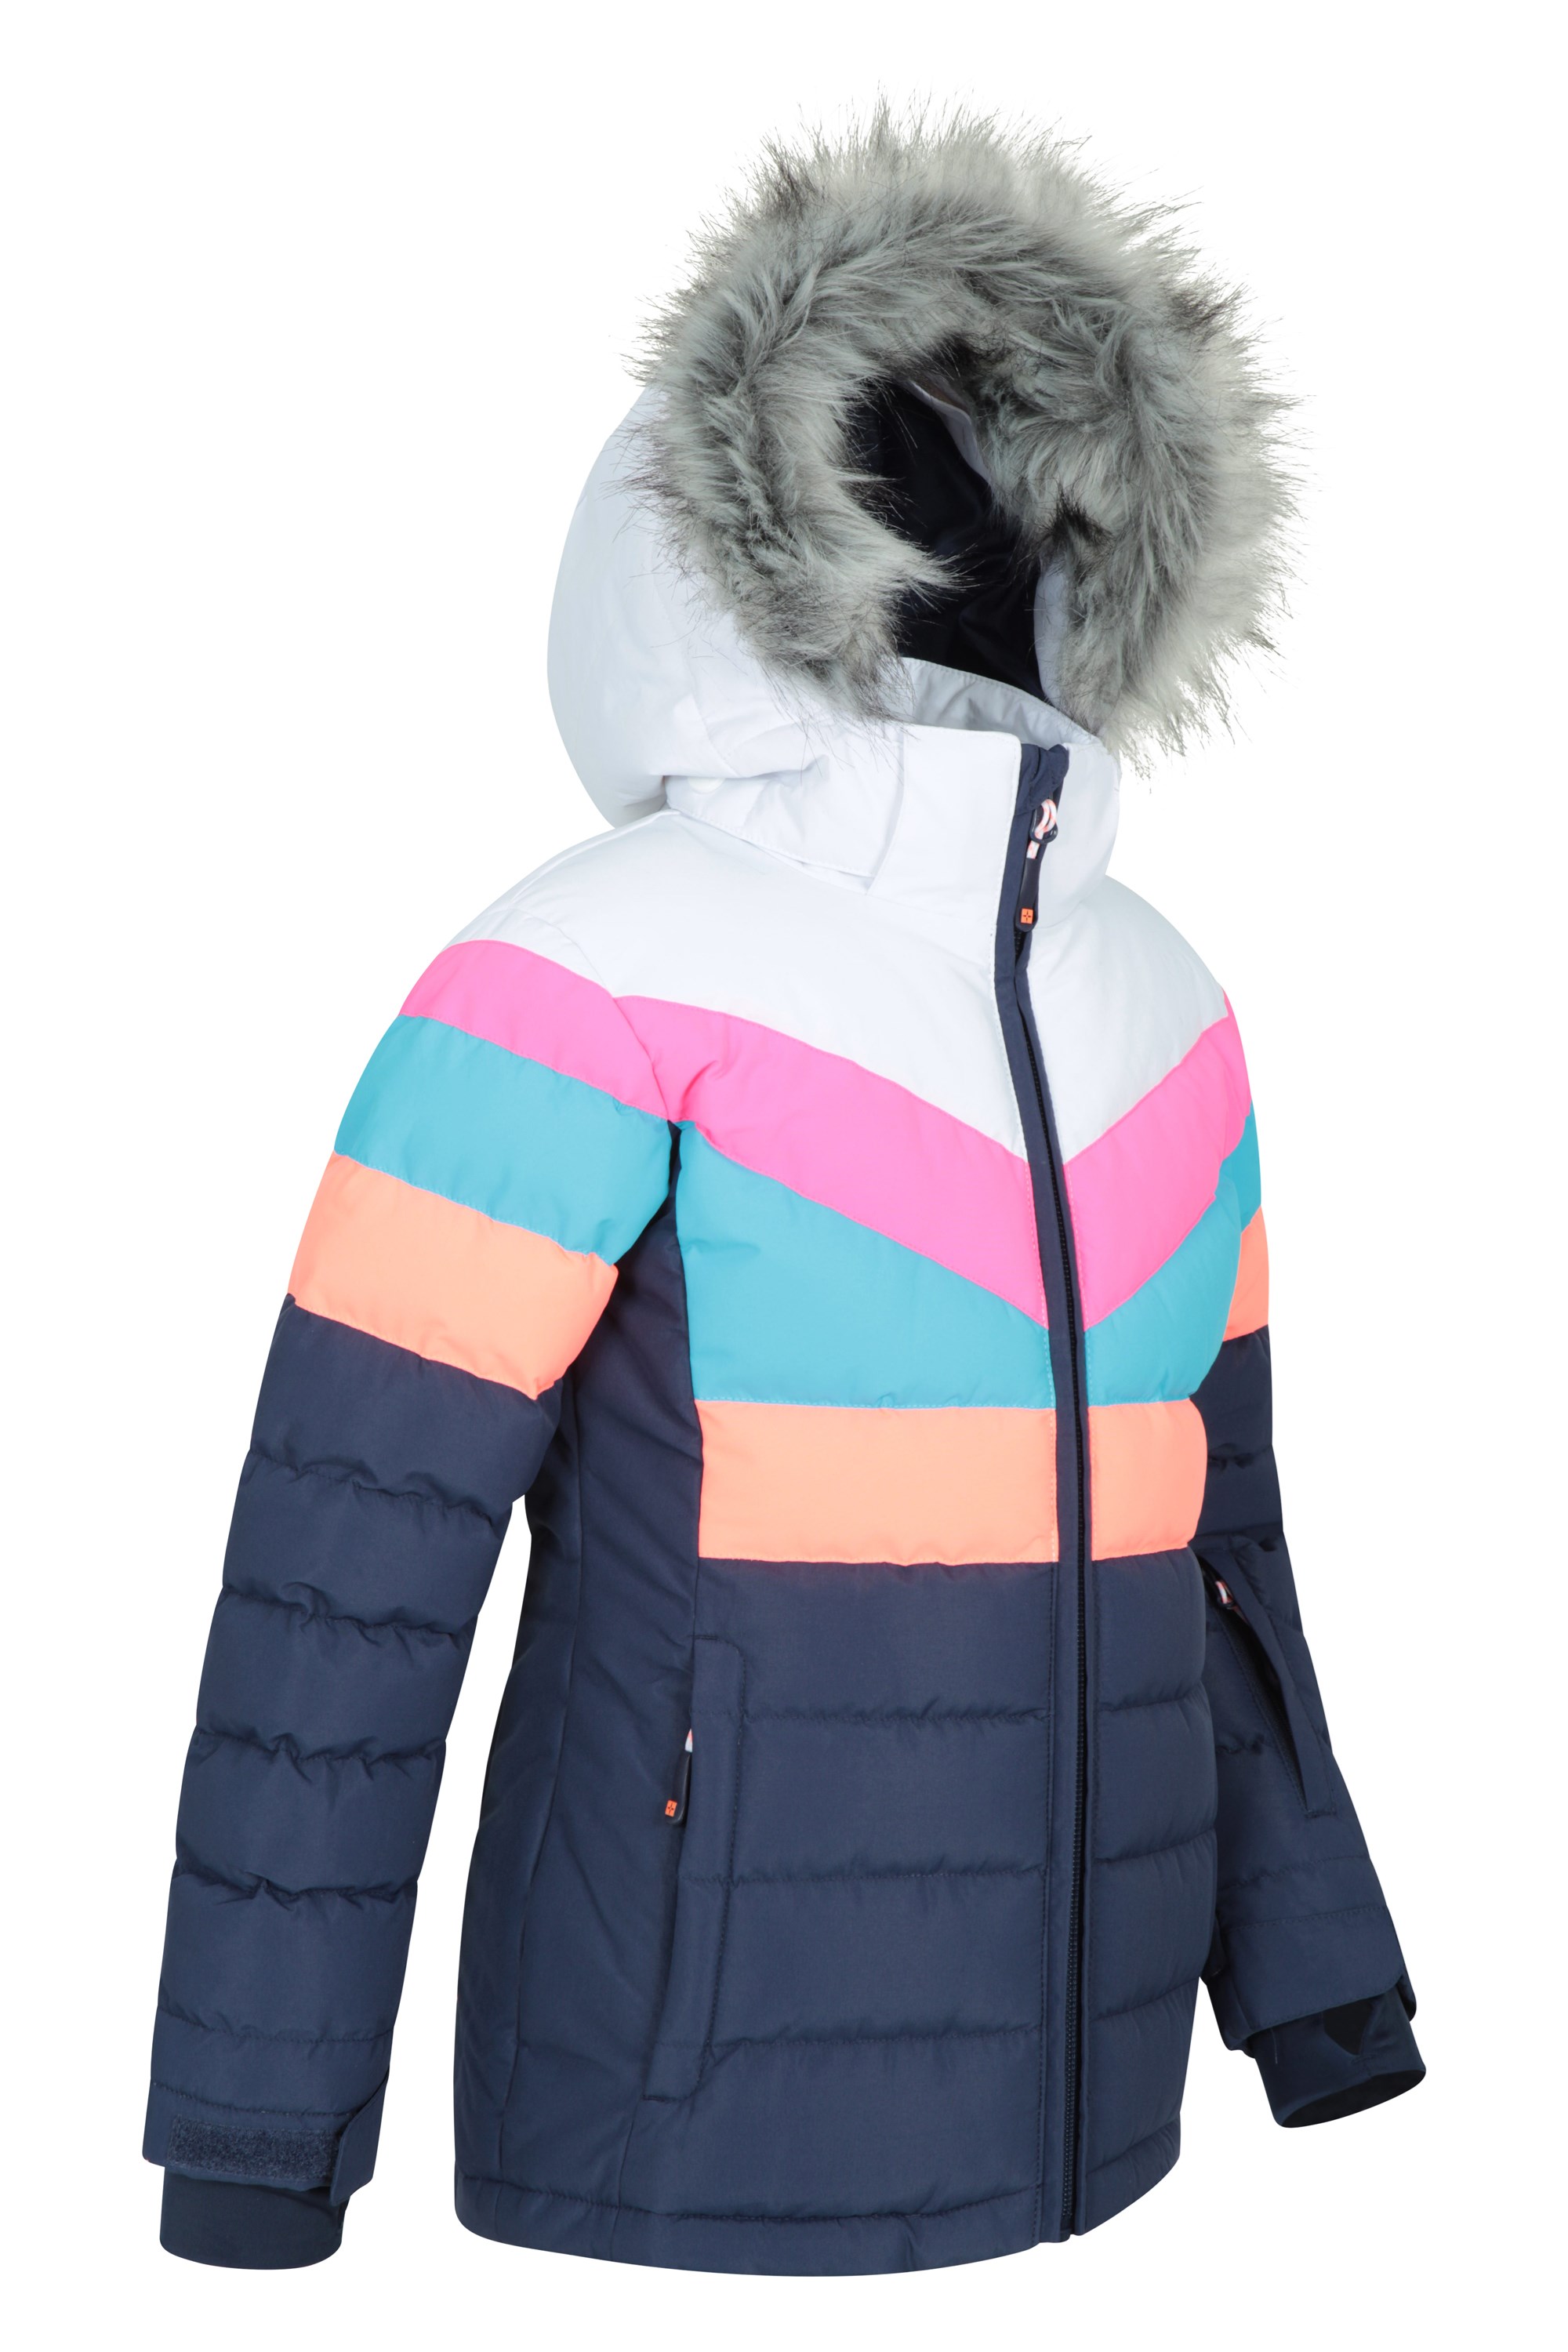 Mountain Warehouse Arctic Winter Kids Ski Jacket Water Resistant